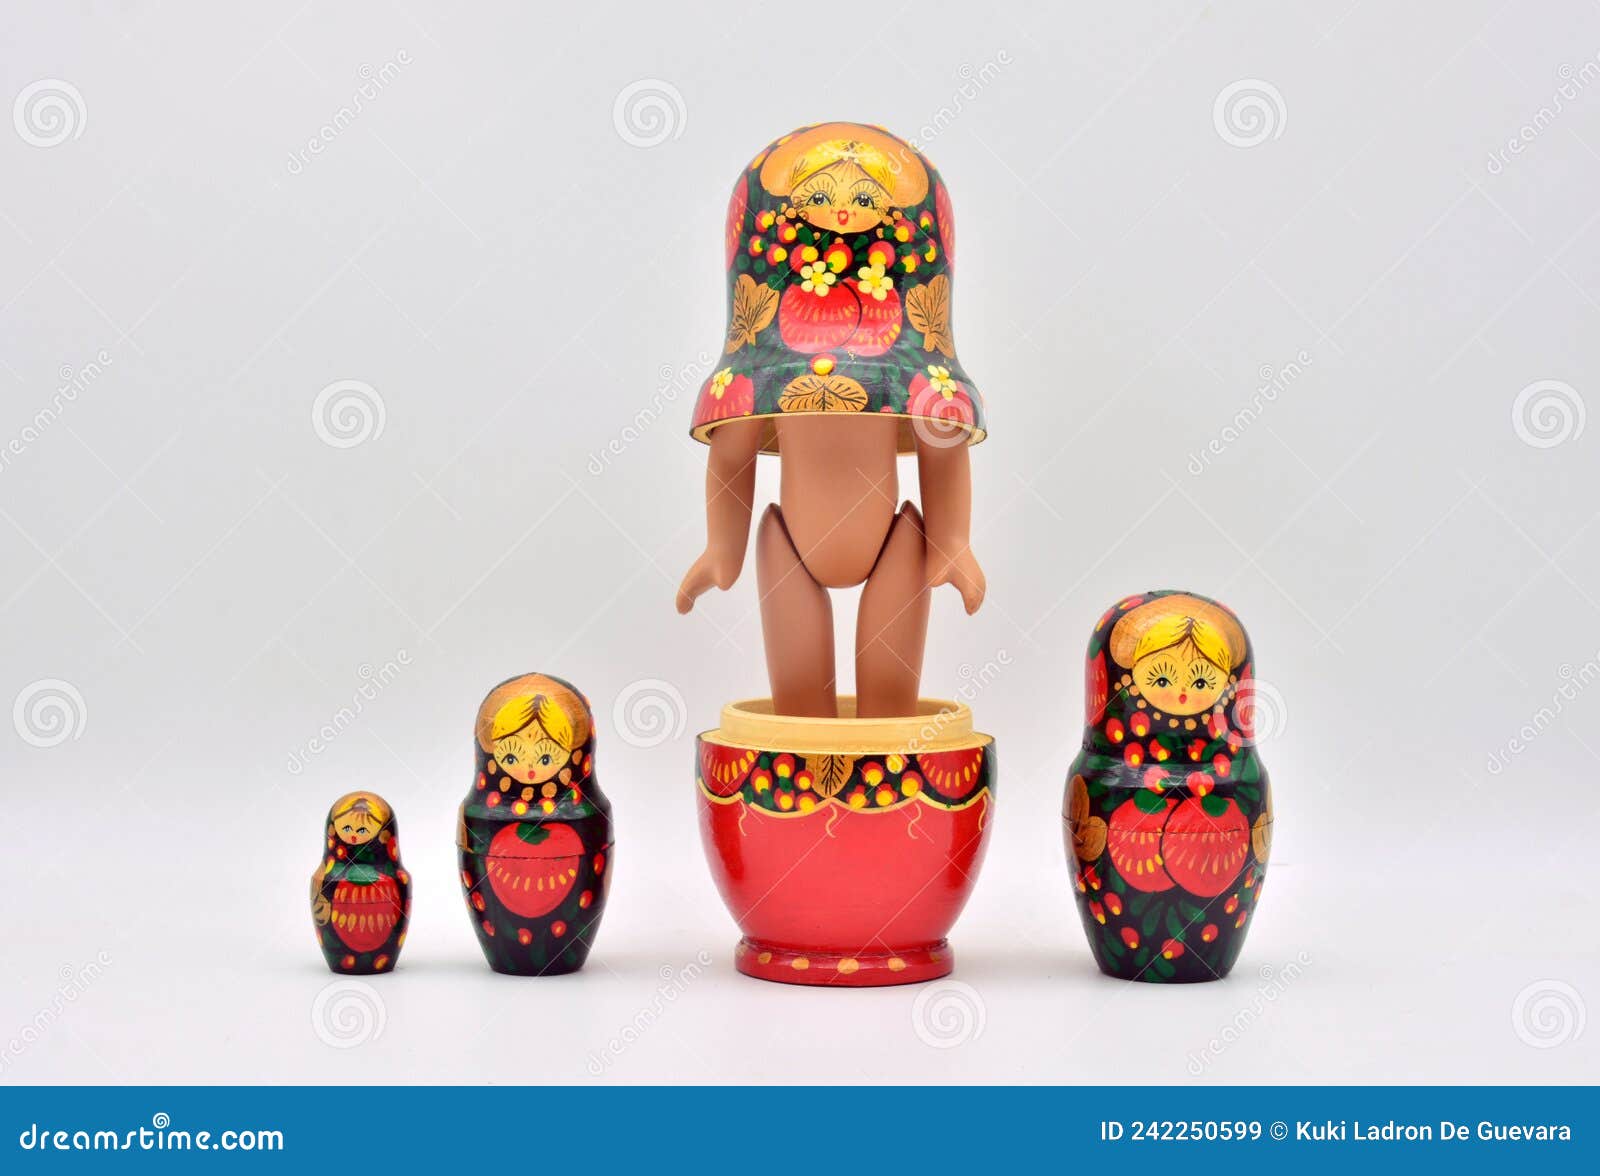 russian dolls, matryoshkas, put in different ways